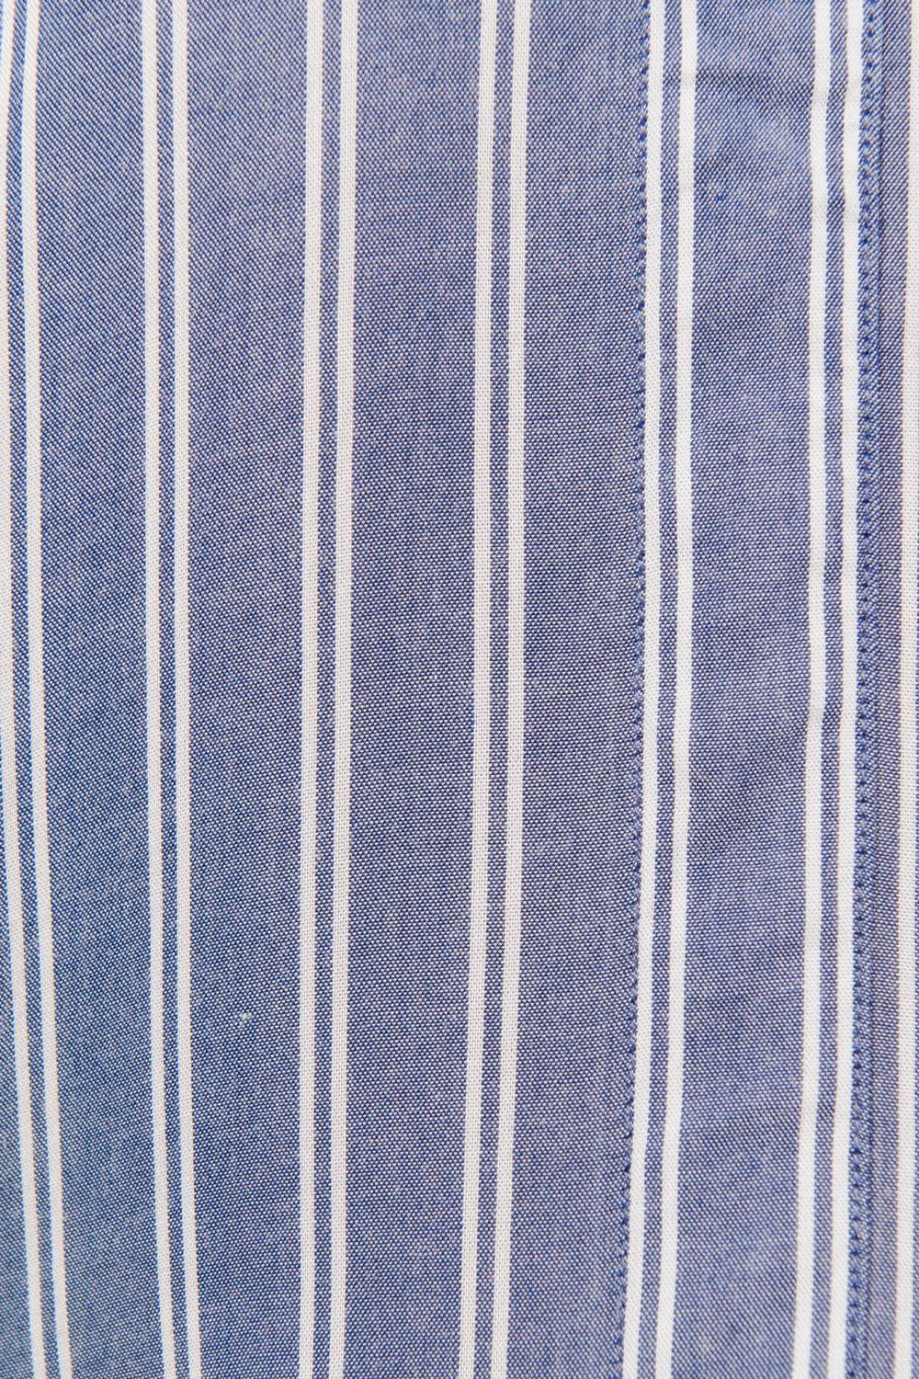 Blusa manga corta unicolor con rayas verticales